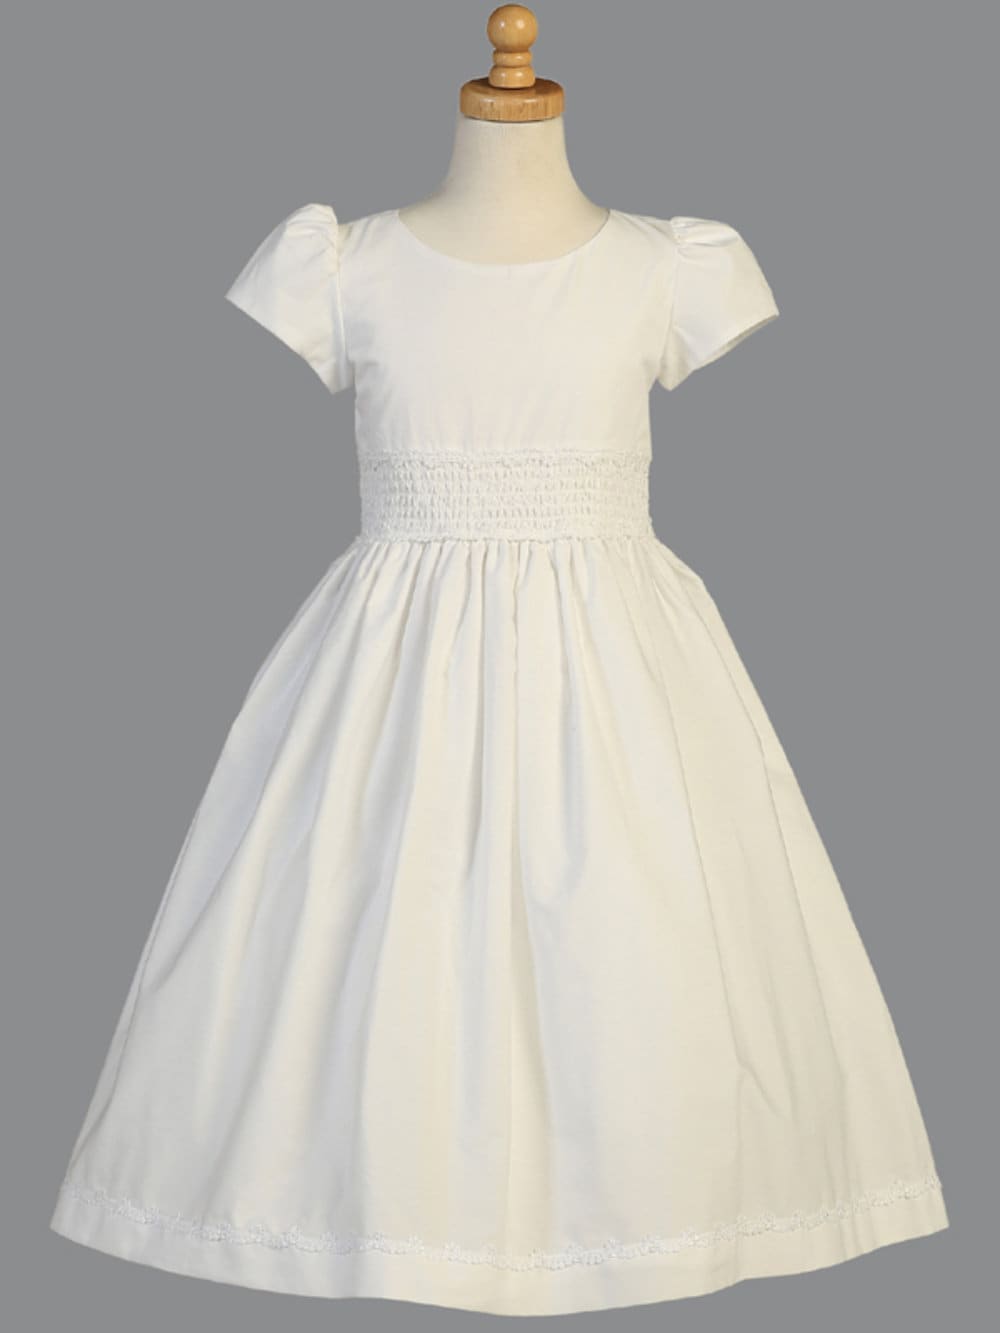 A view of the dress's tea-length hemline.